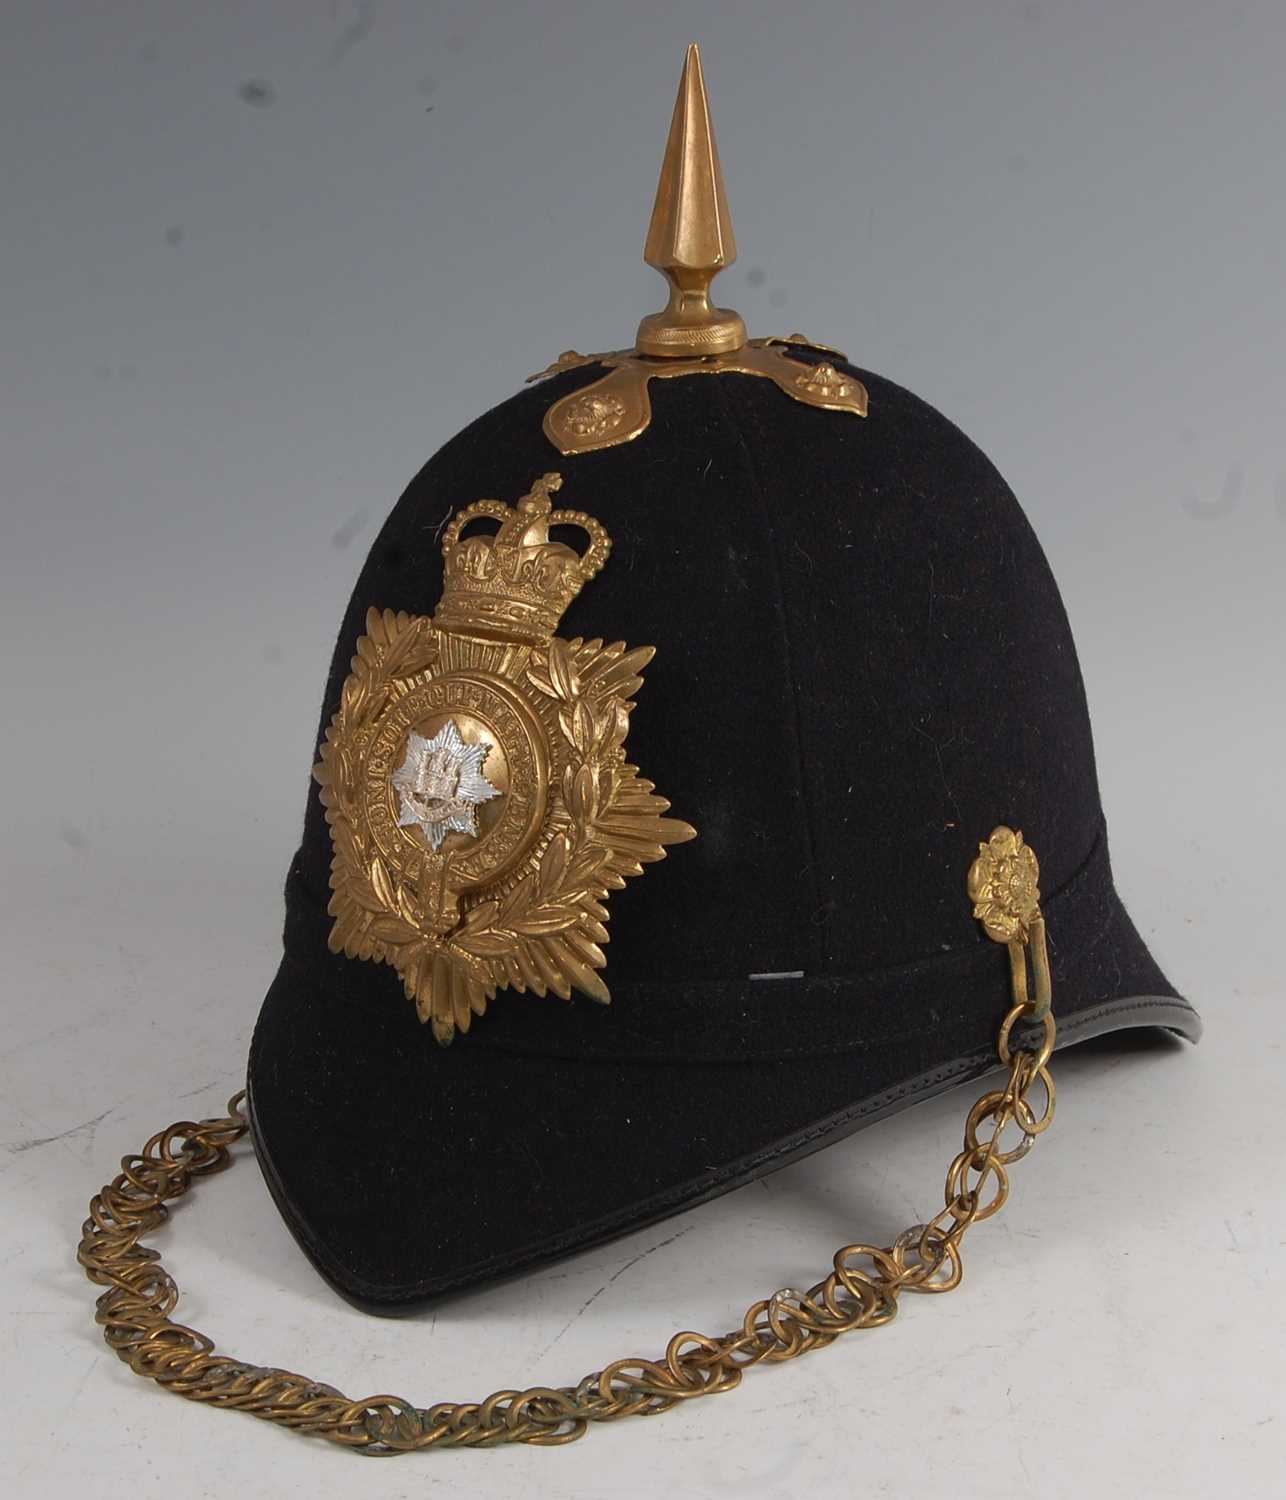 Lot 55 - A 20th century Royal Anglian blue cloth covered helmet